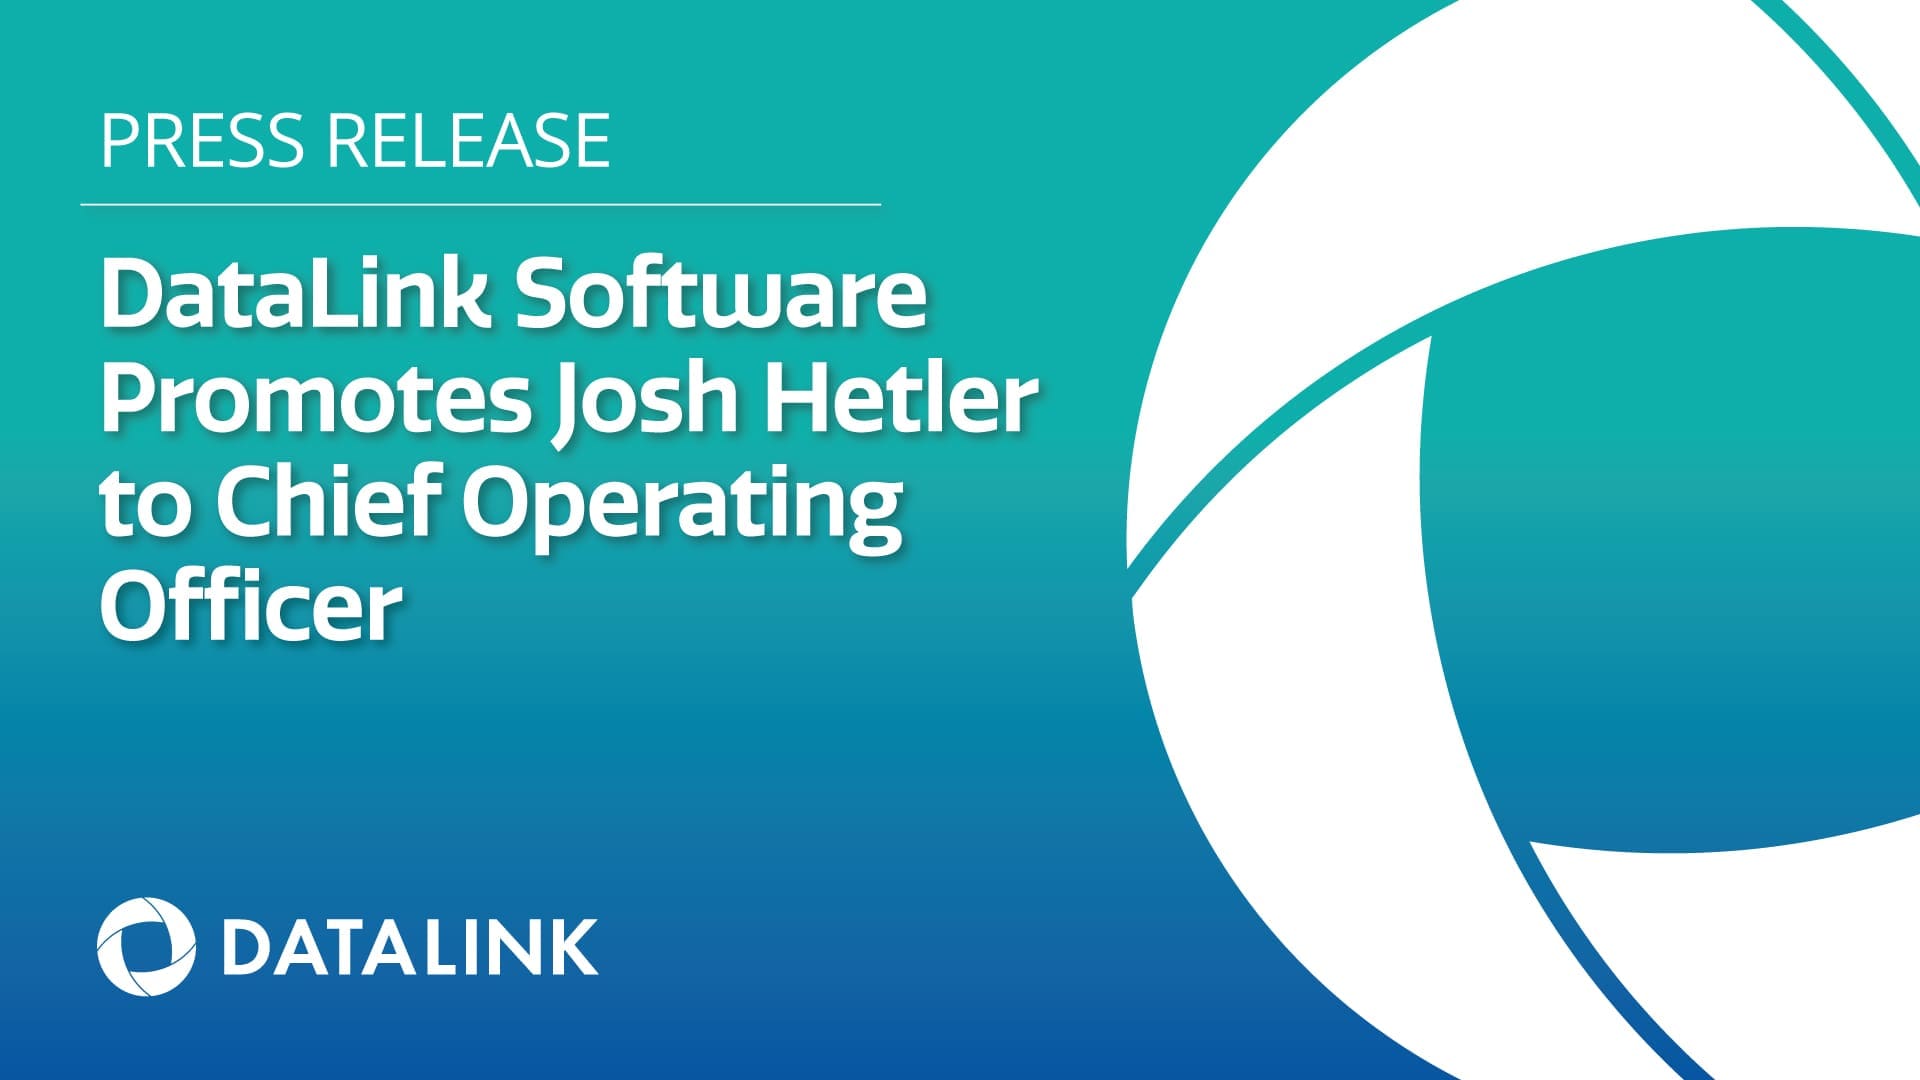 Press release: DataLink promotes Josh Hetler to chief operating officer